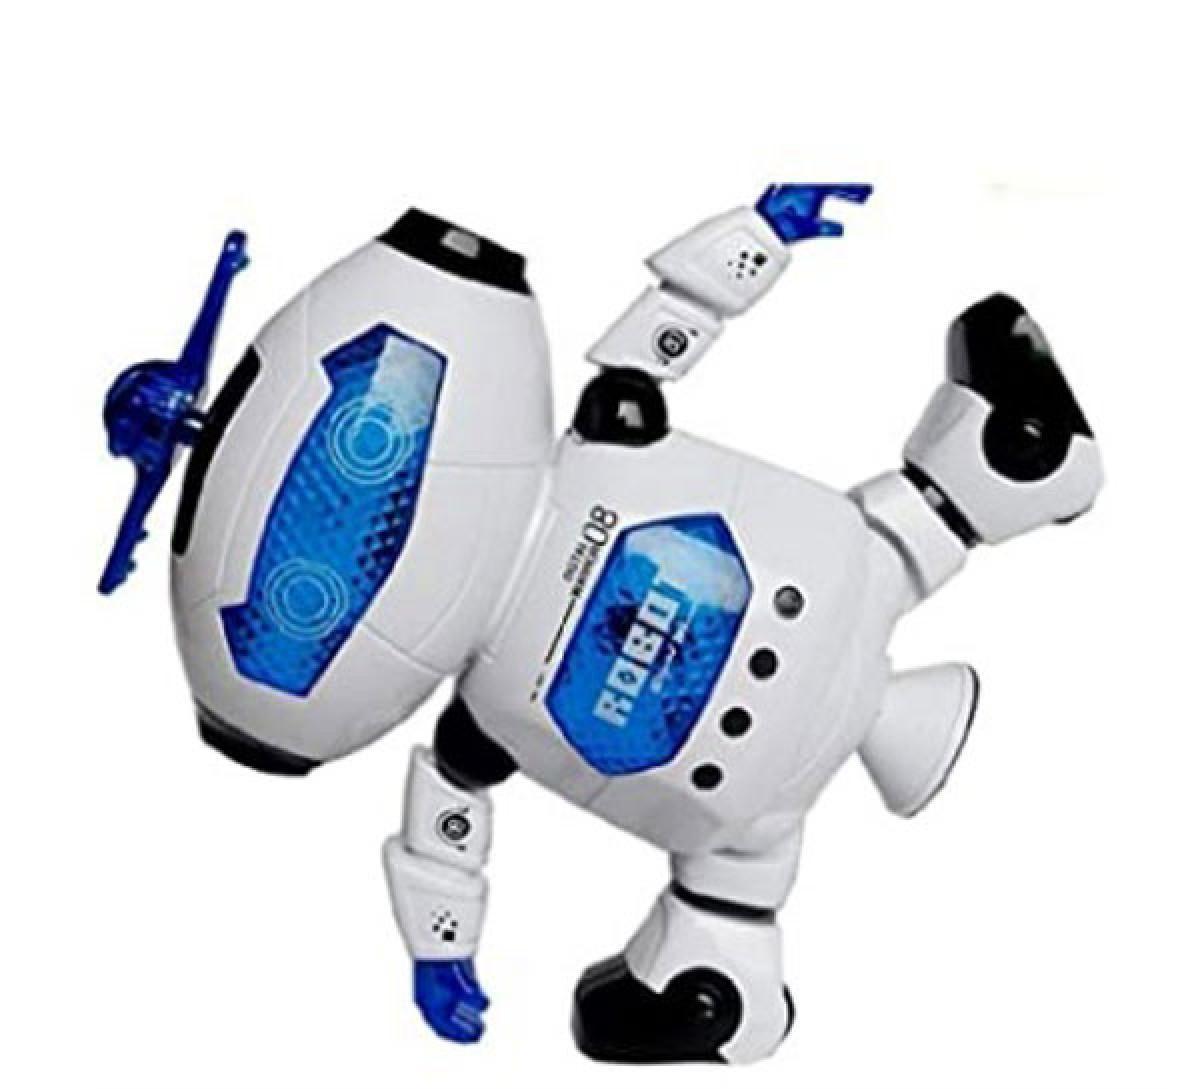 Selected image for Boy Toymachine Robot igračka koja se rotira 360 stepeni